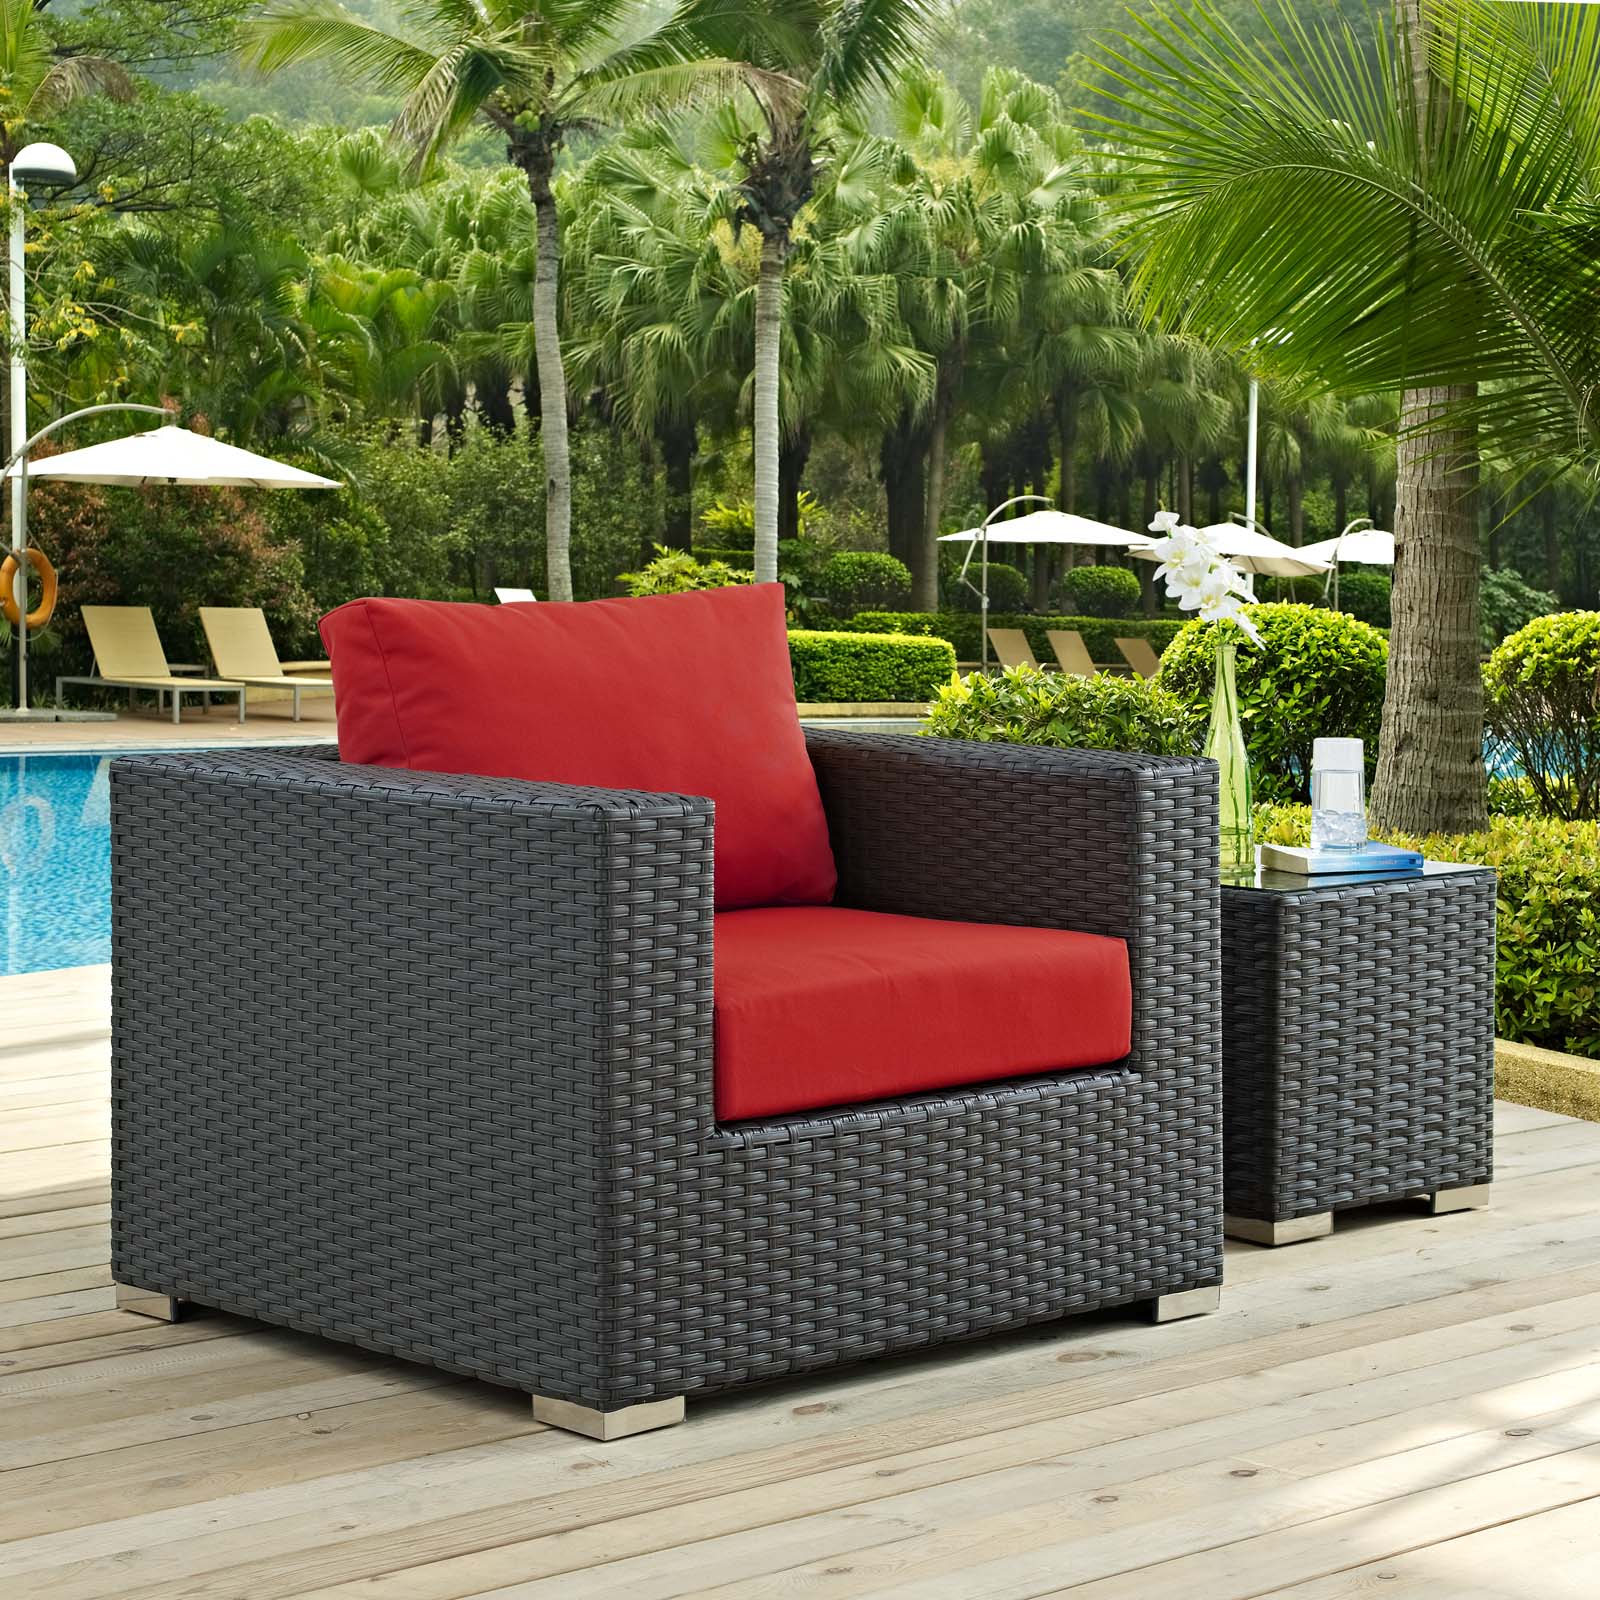 Modern Contemporary Urban Design Outdoor Patio Balcony Garden Furniture Lounge Chair Armchair, Sunbrella Rattan Wicker, Red - image 2 of 4